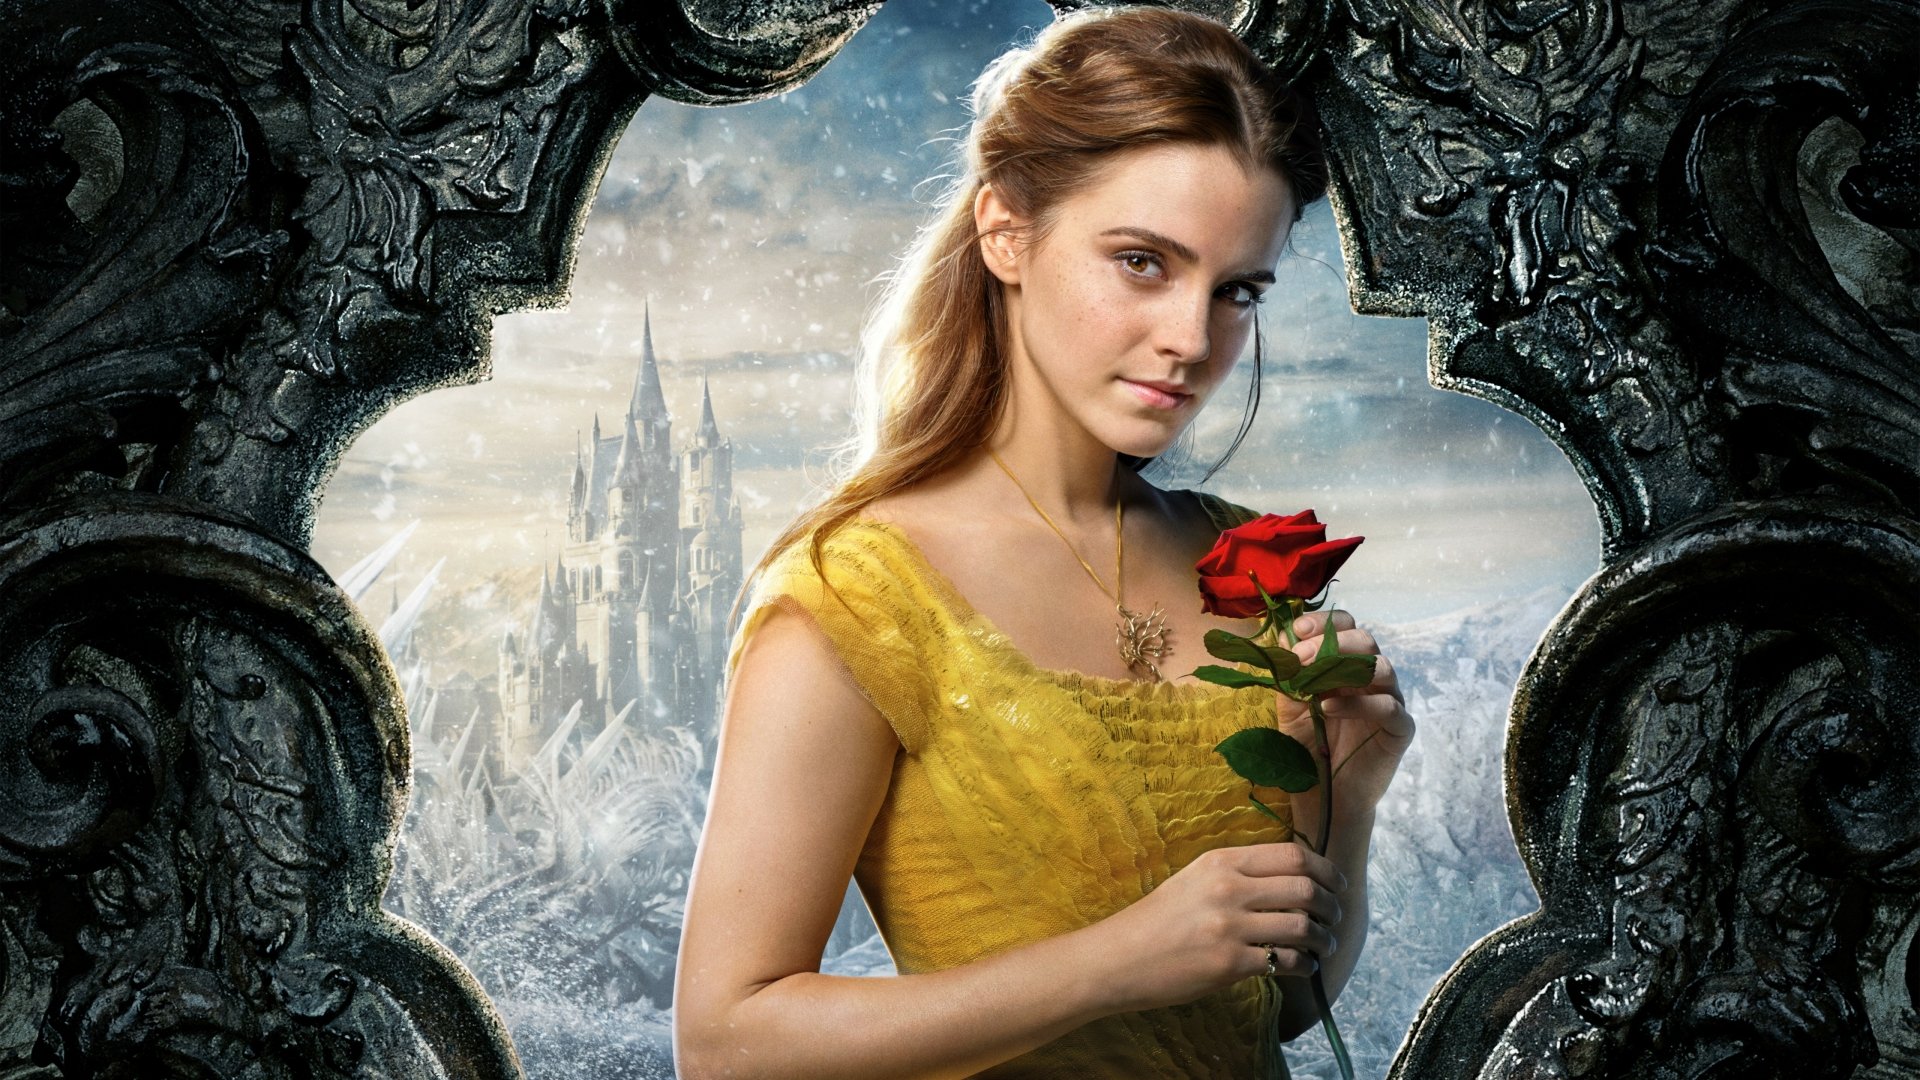 Download Rose Emma Watson Movie Beauty And The Beast (2017)  4k Ultra HD Wallpaper